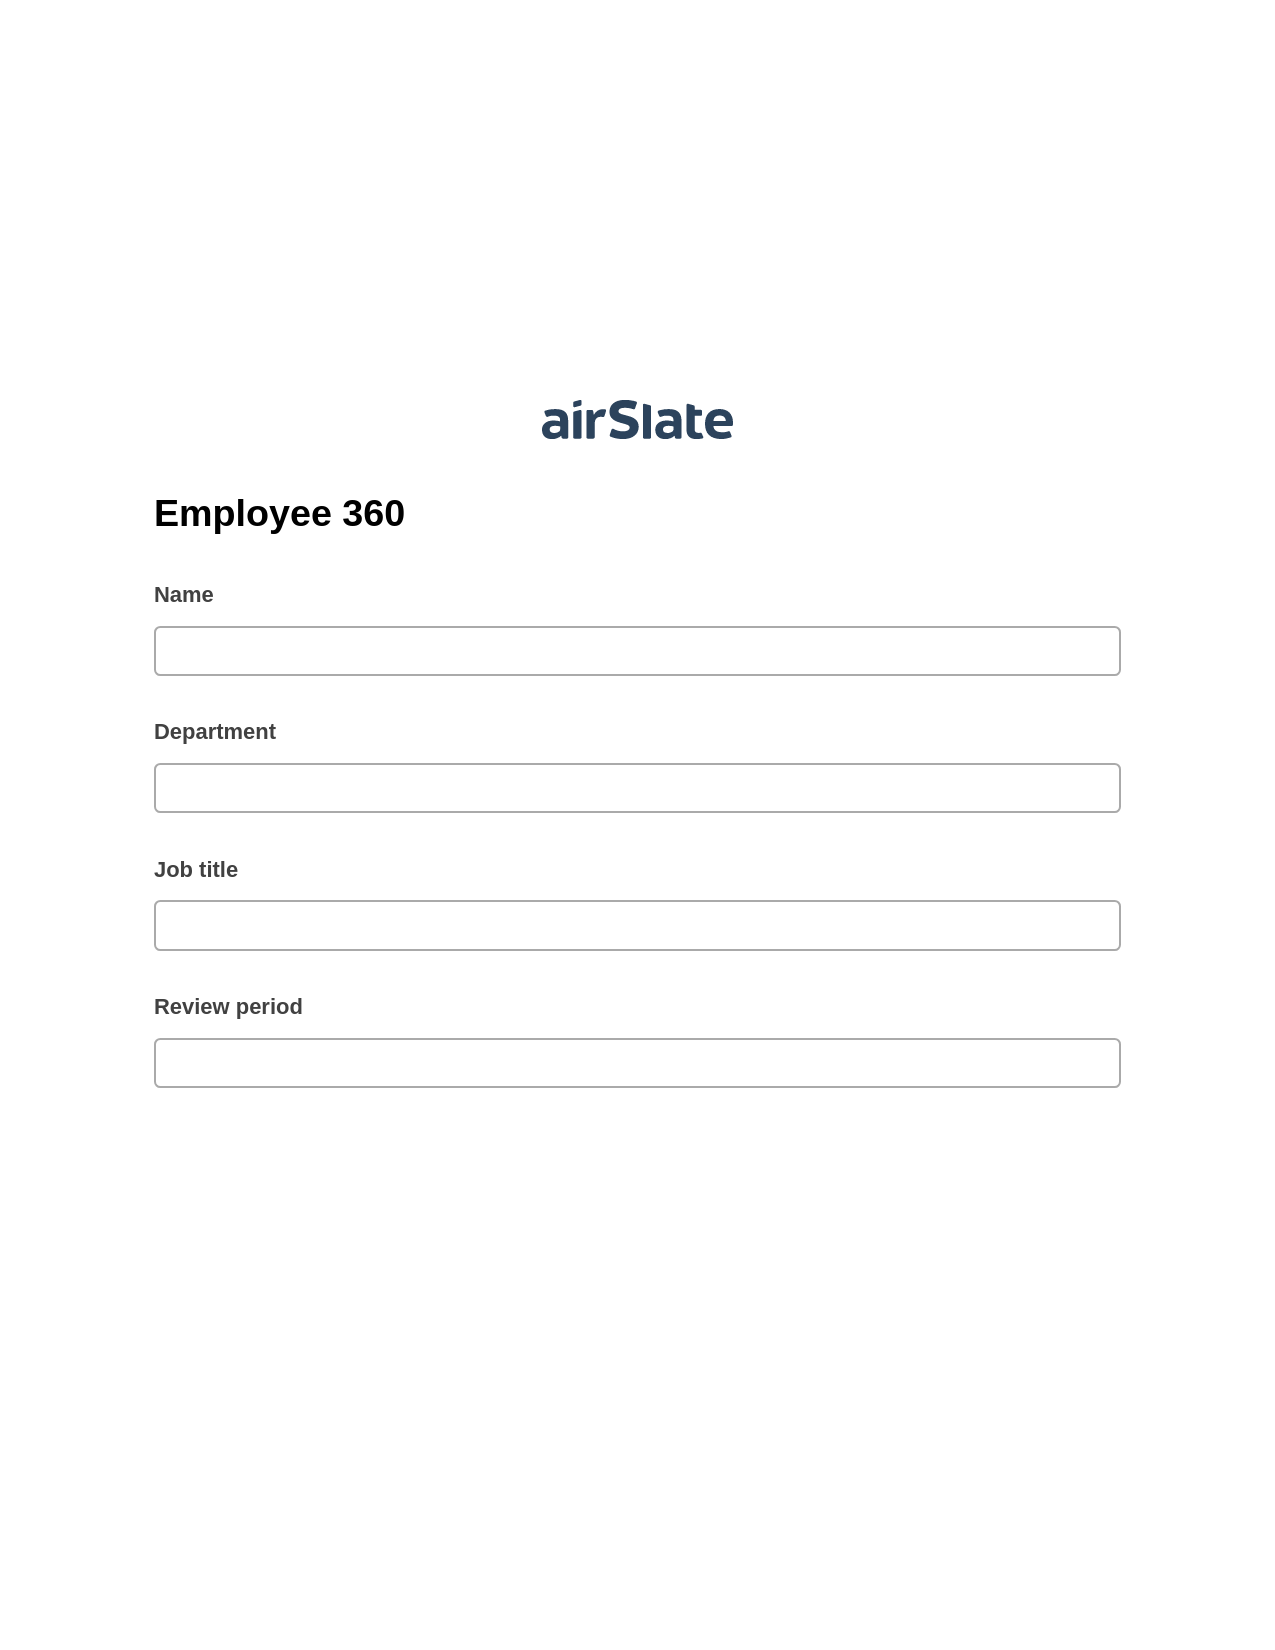 Employee 360 Prefill from NetSuite records, Google Calendar Bot, Slack Two-Way Binding Bot